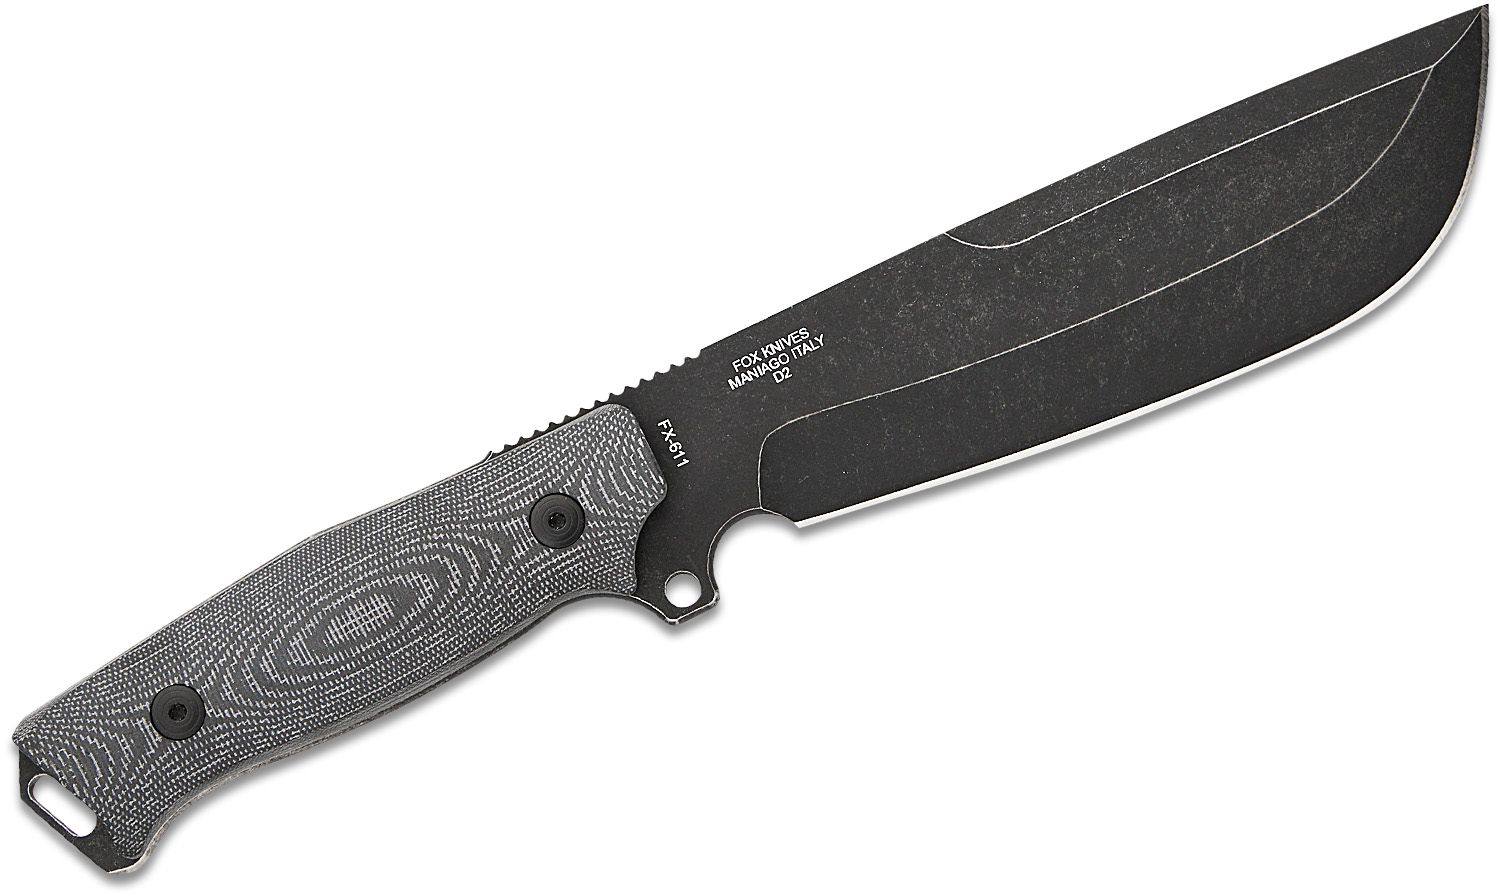 Fox - Native Bushcraft - Idroglider D2, Black Micarta - FX-611 - single  edge fixed knife, made in Italy